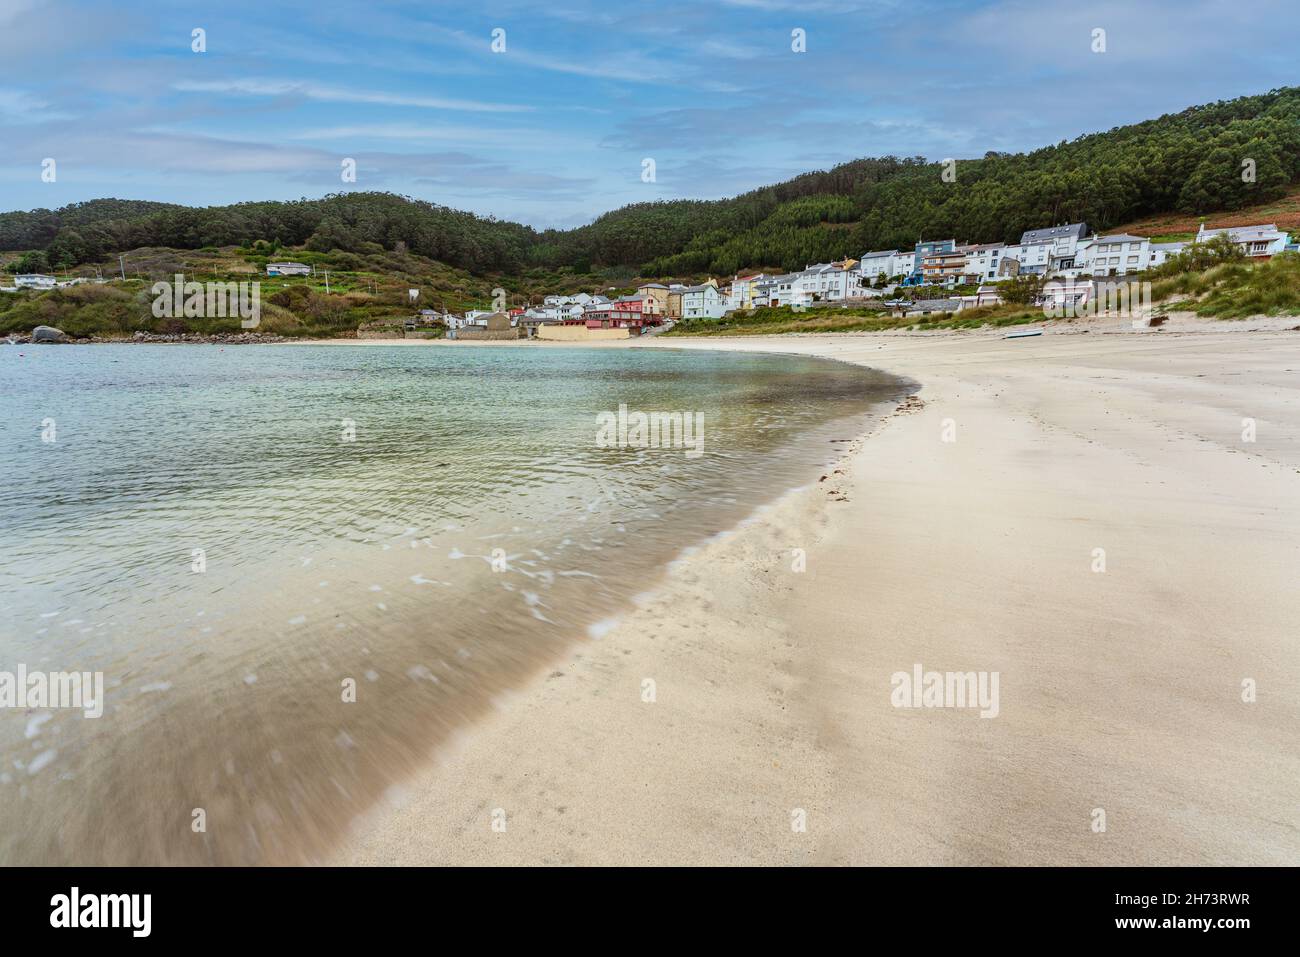 Porto de Bares picturesque beach fishing village in Galicia Spain Stock Photo